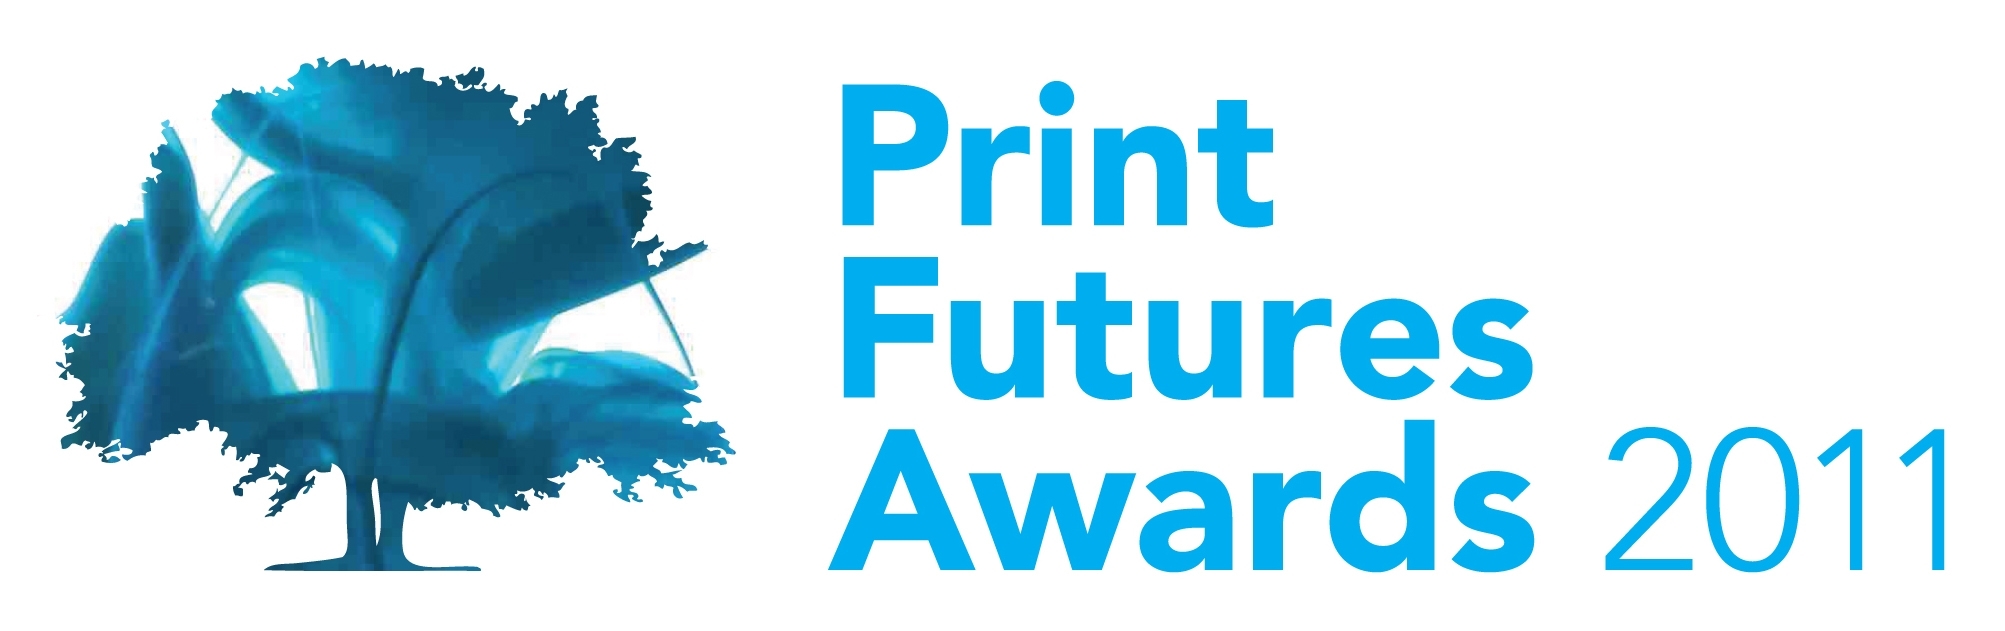 2011 Print Futures Awards Open for Entries